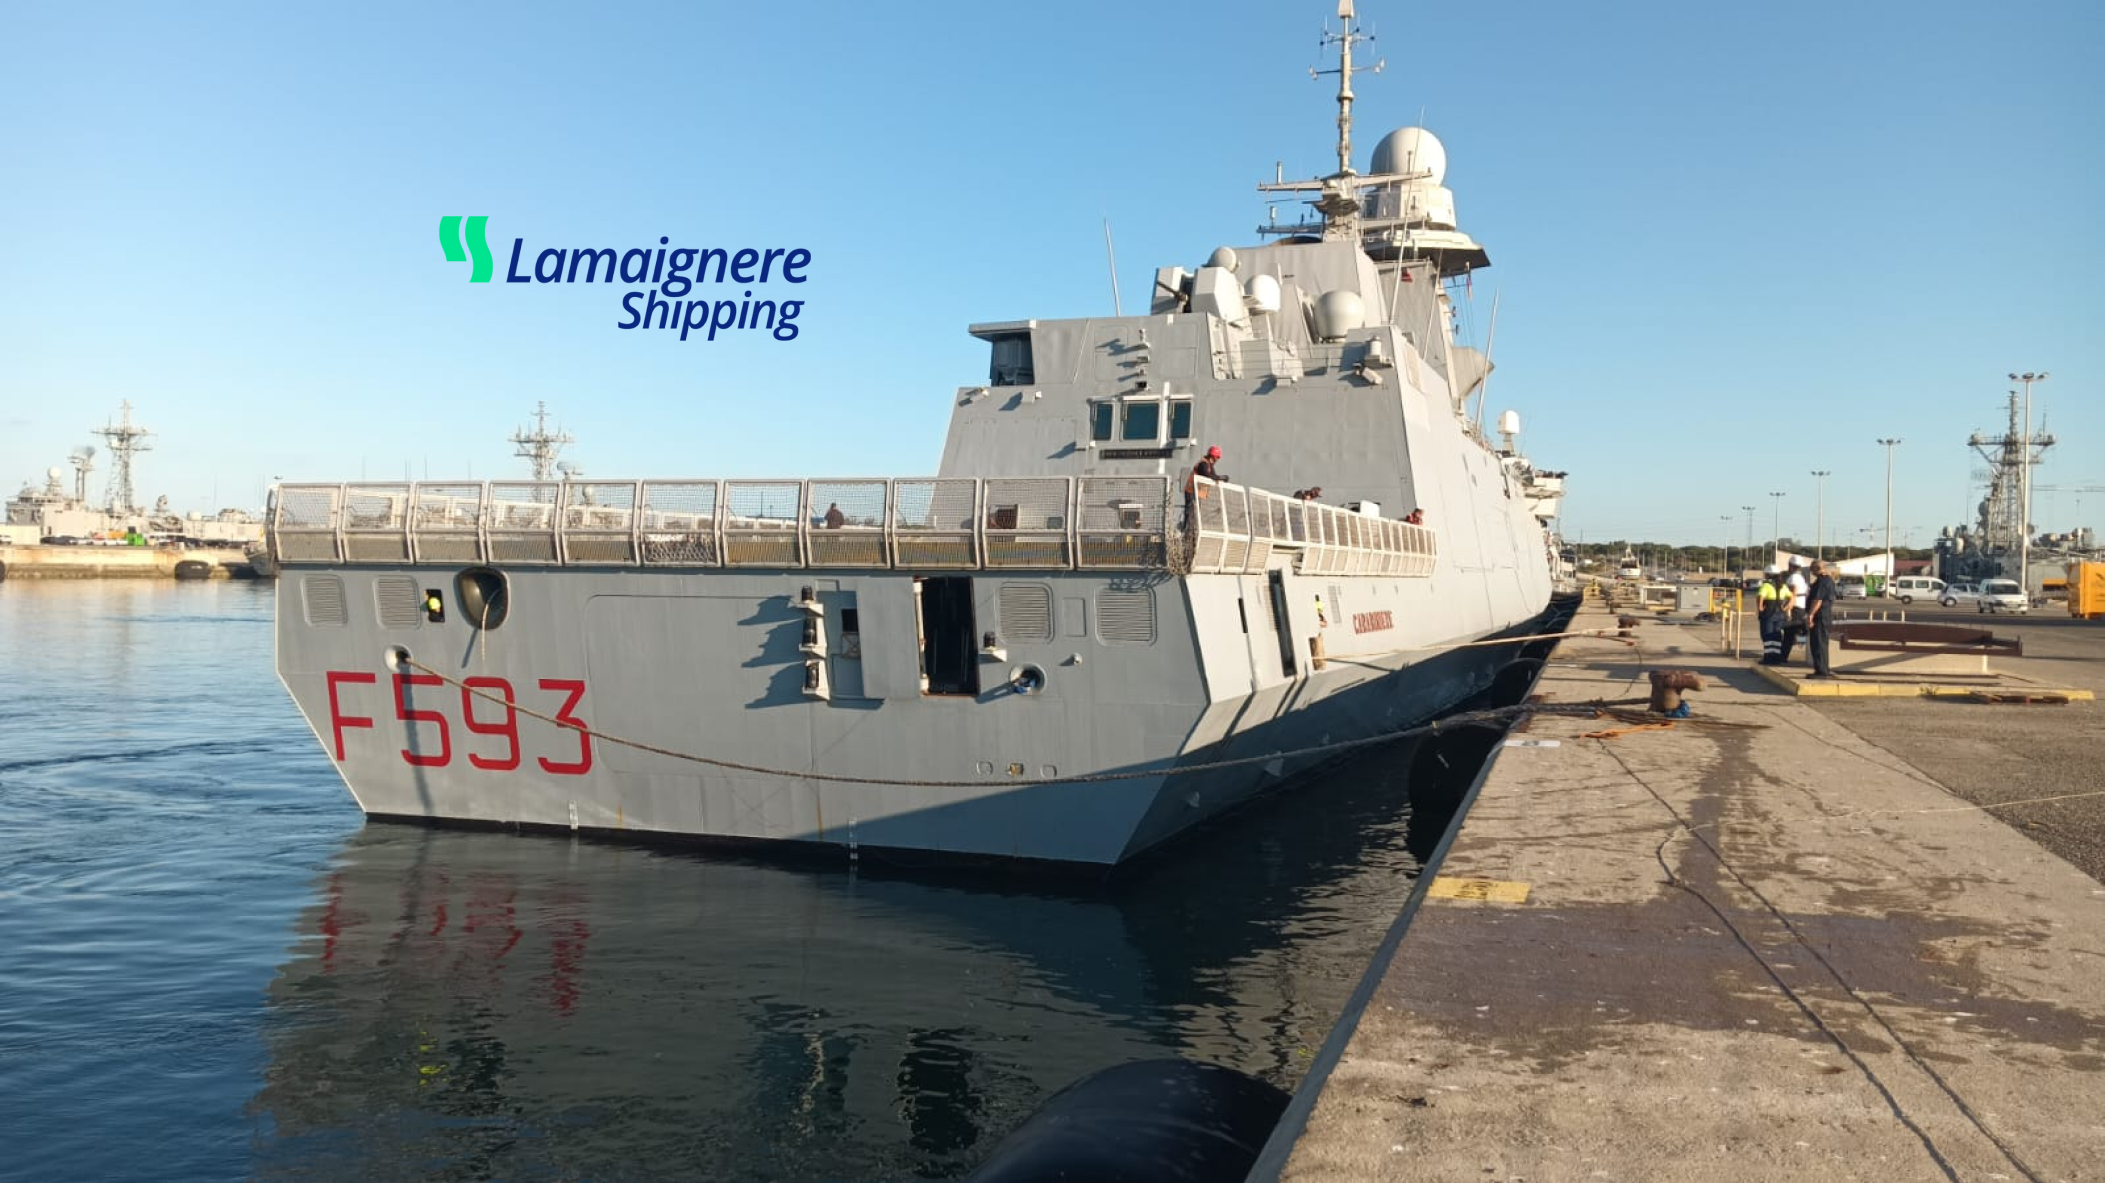 Lamaignere Shipping assists the Italian military ship ITS Carabiniere